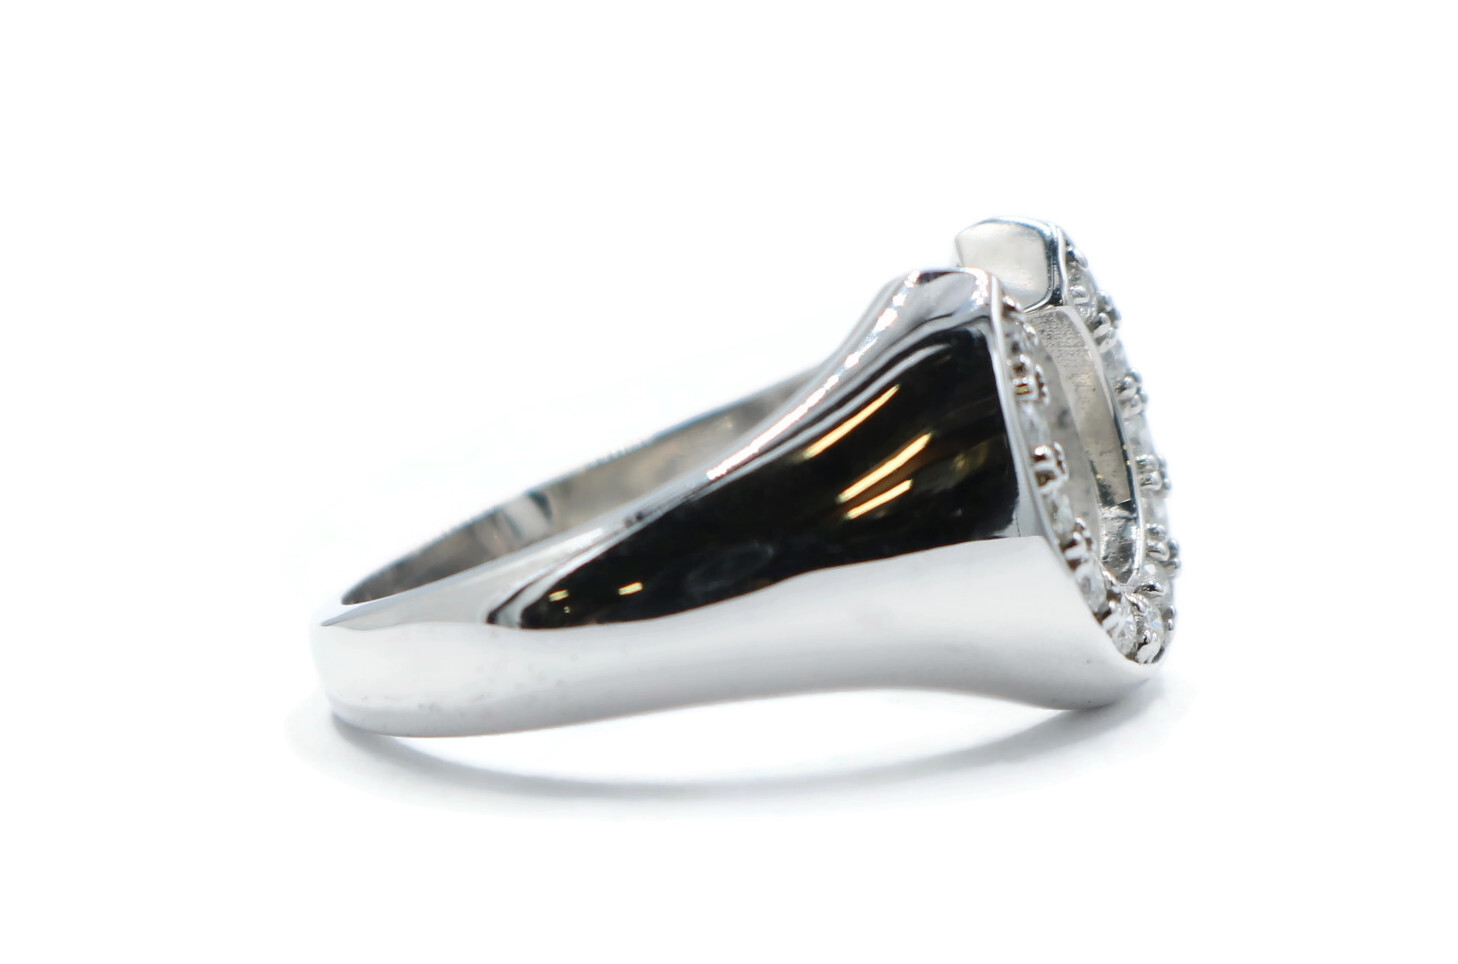 Rodeo Diamond Horseshoe Style Men's Ring in Size 9.5 10KT White Gold 5.40 Grams